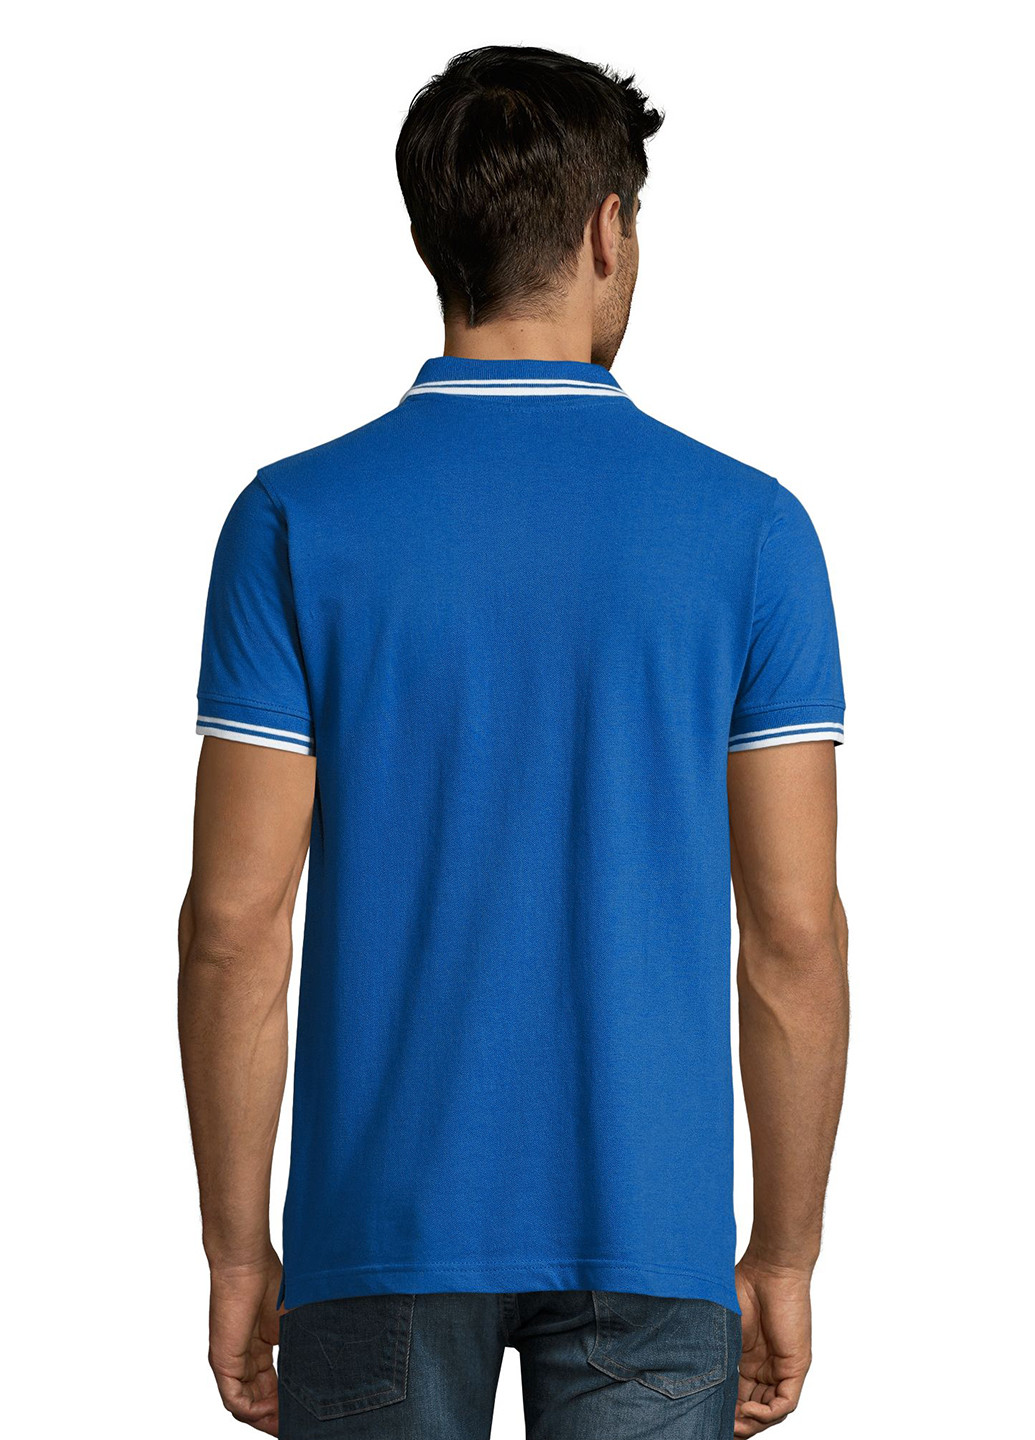 Синяя футболка-поло для мужчин Sol's в полоску